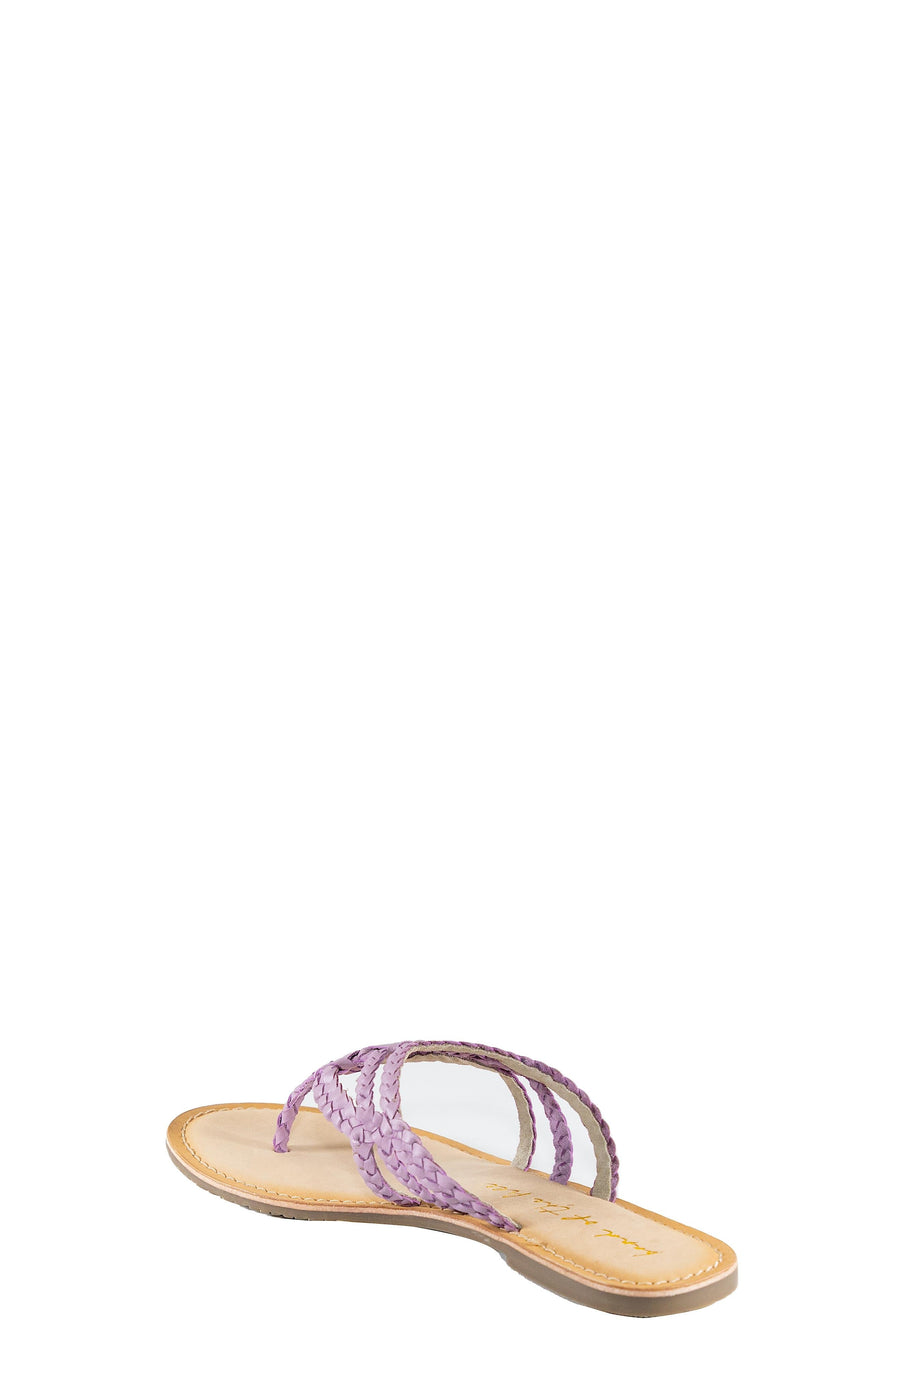 Vela Lilac Leather Strappy Sandal